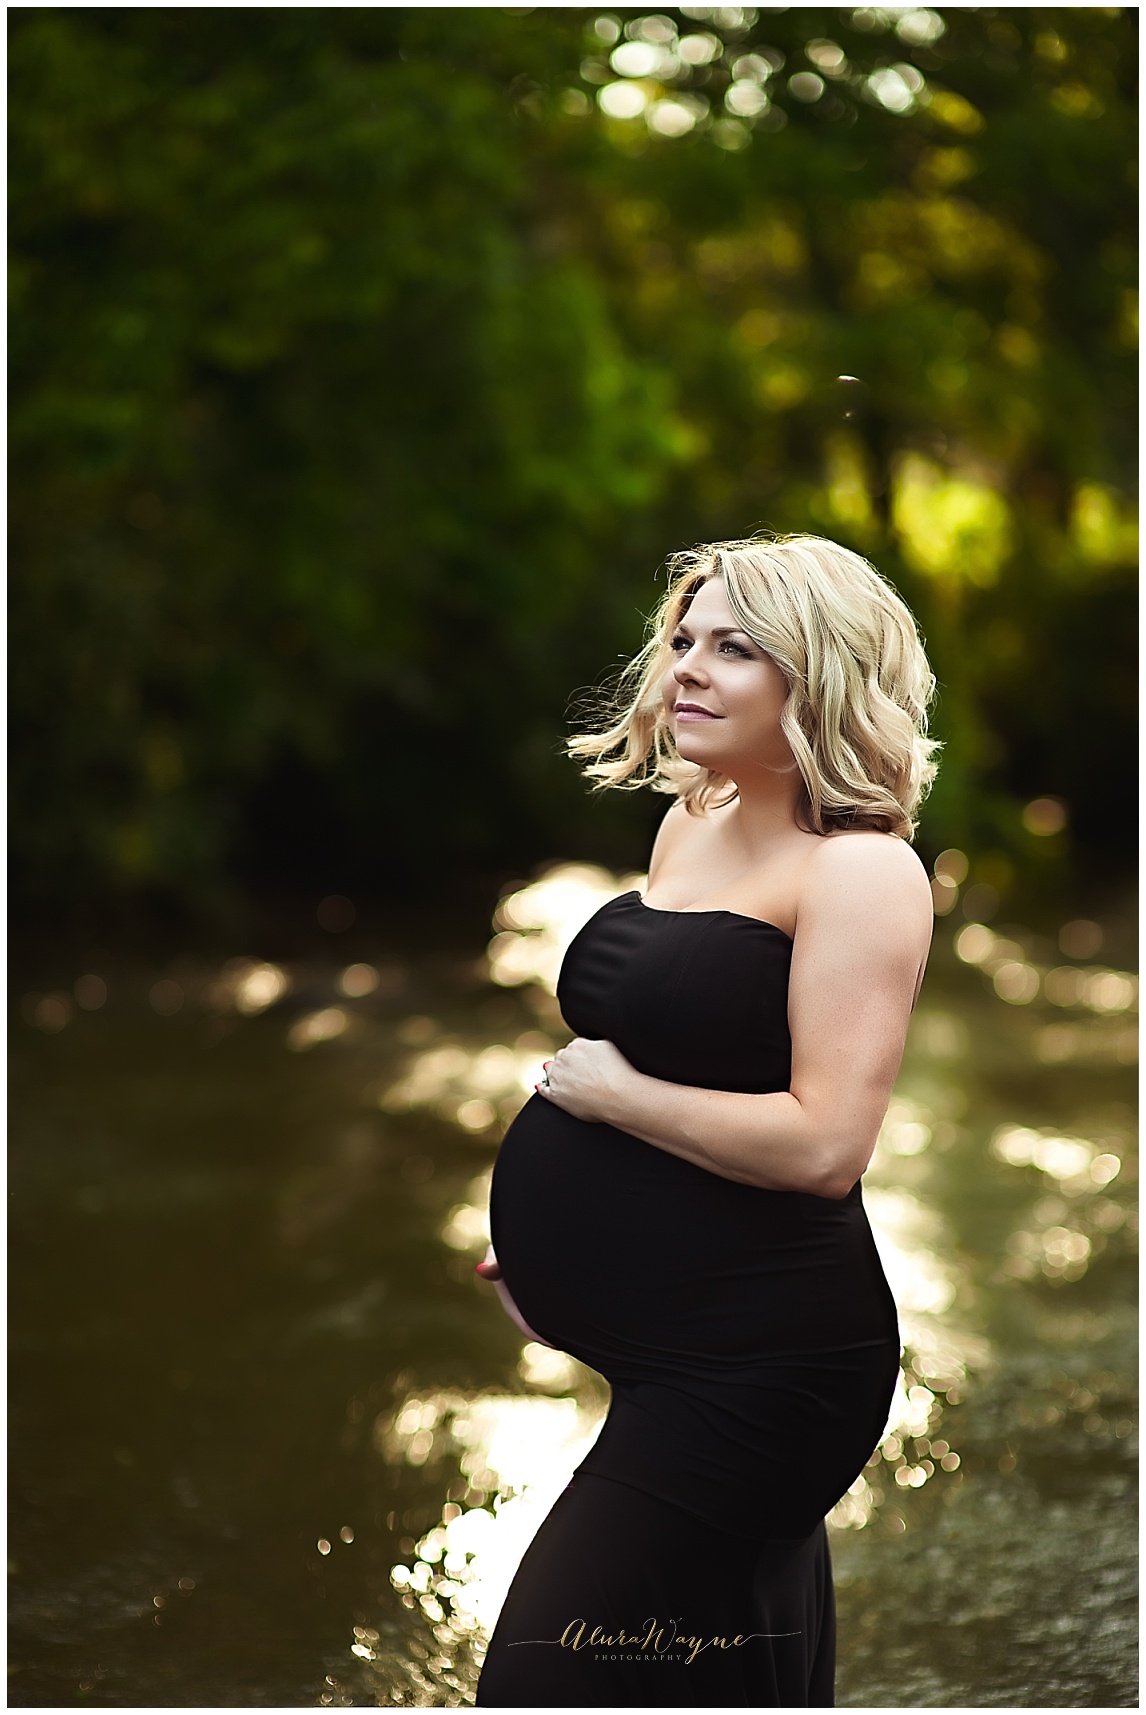 Laura's Maternity Session, Milk Bath and Creek {Nashville, TN Maternity ...